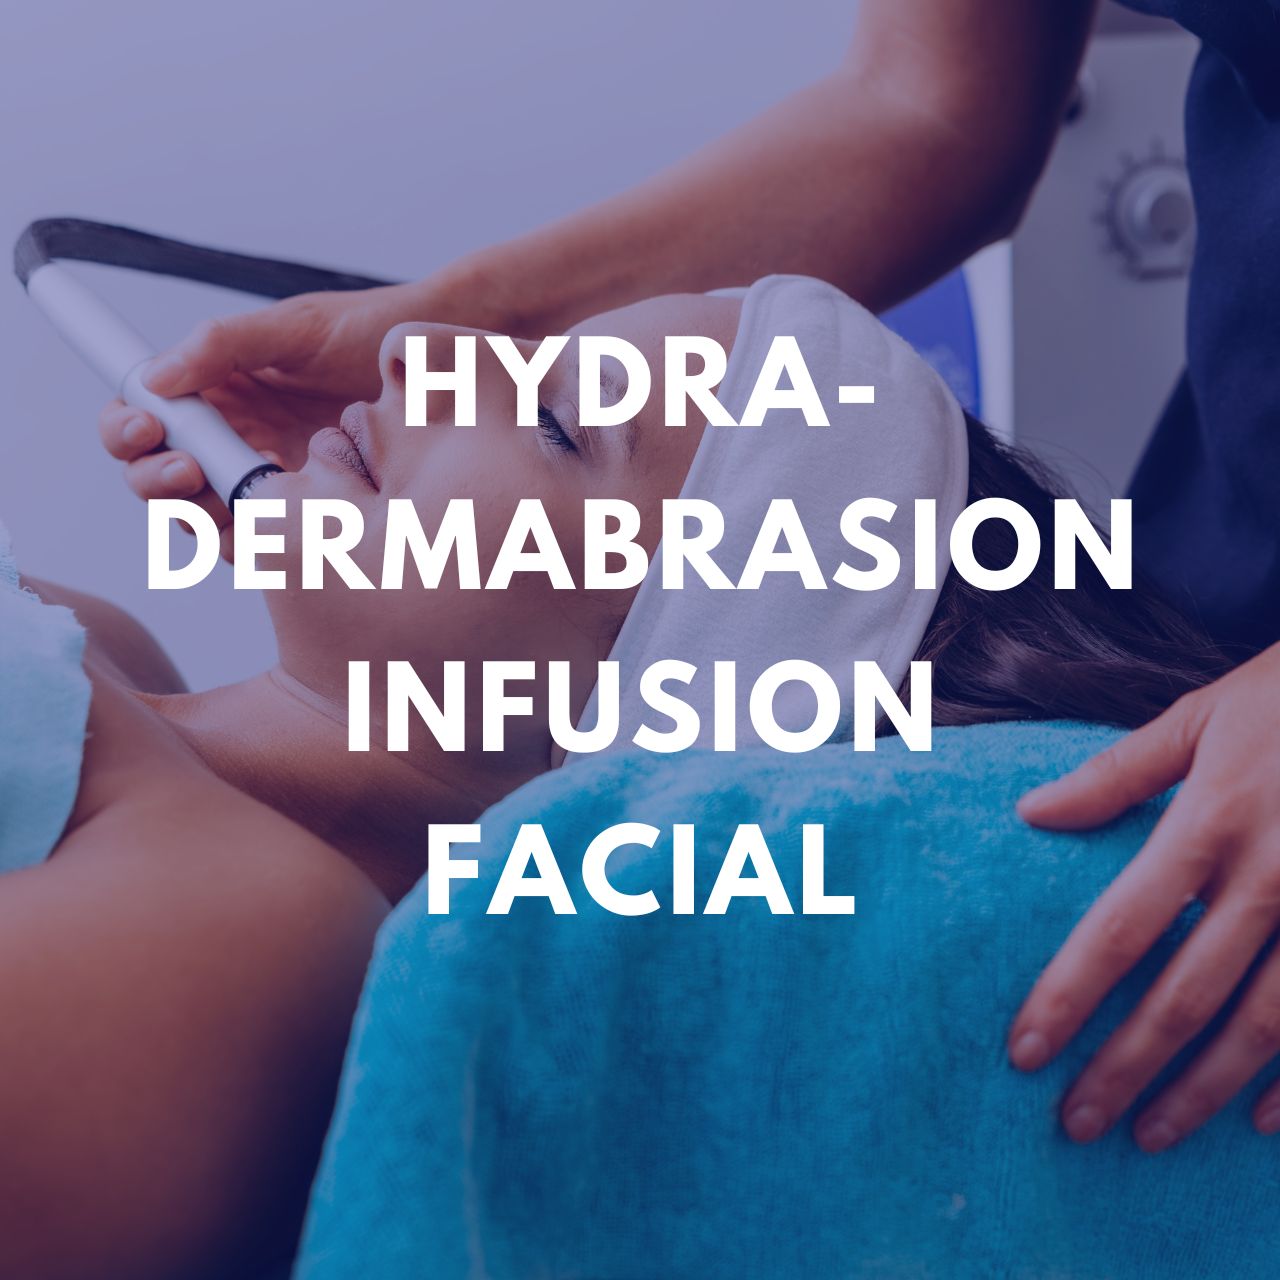 Hydra-Dermabrasion Infusion Facial